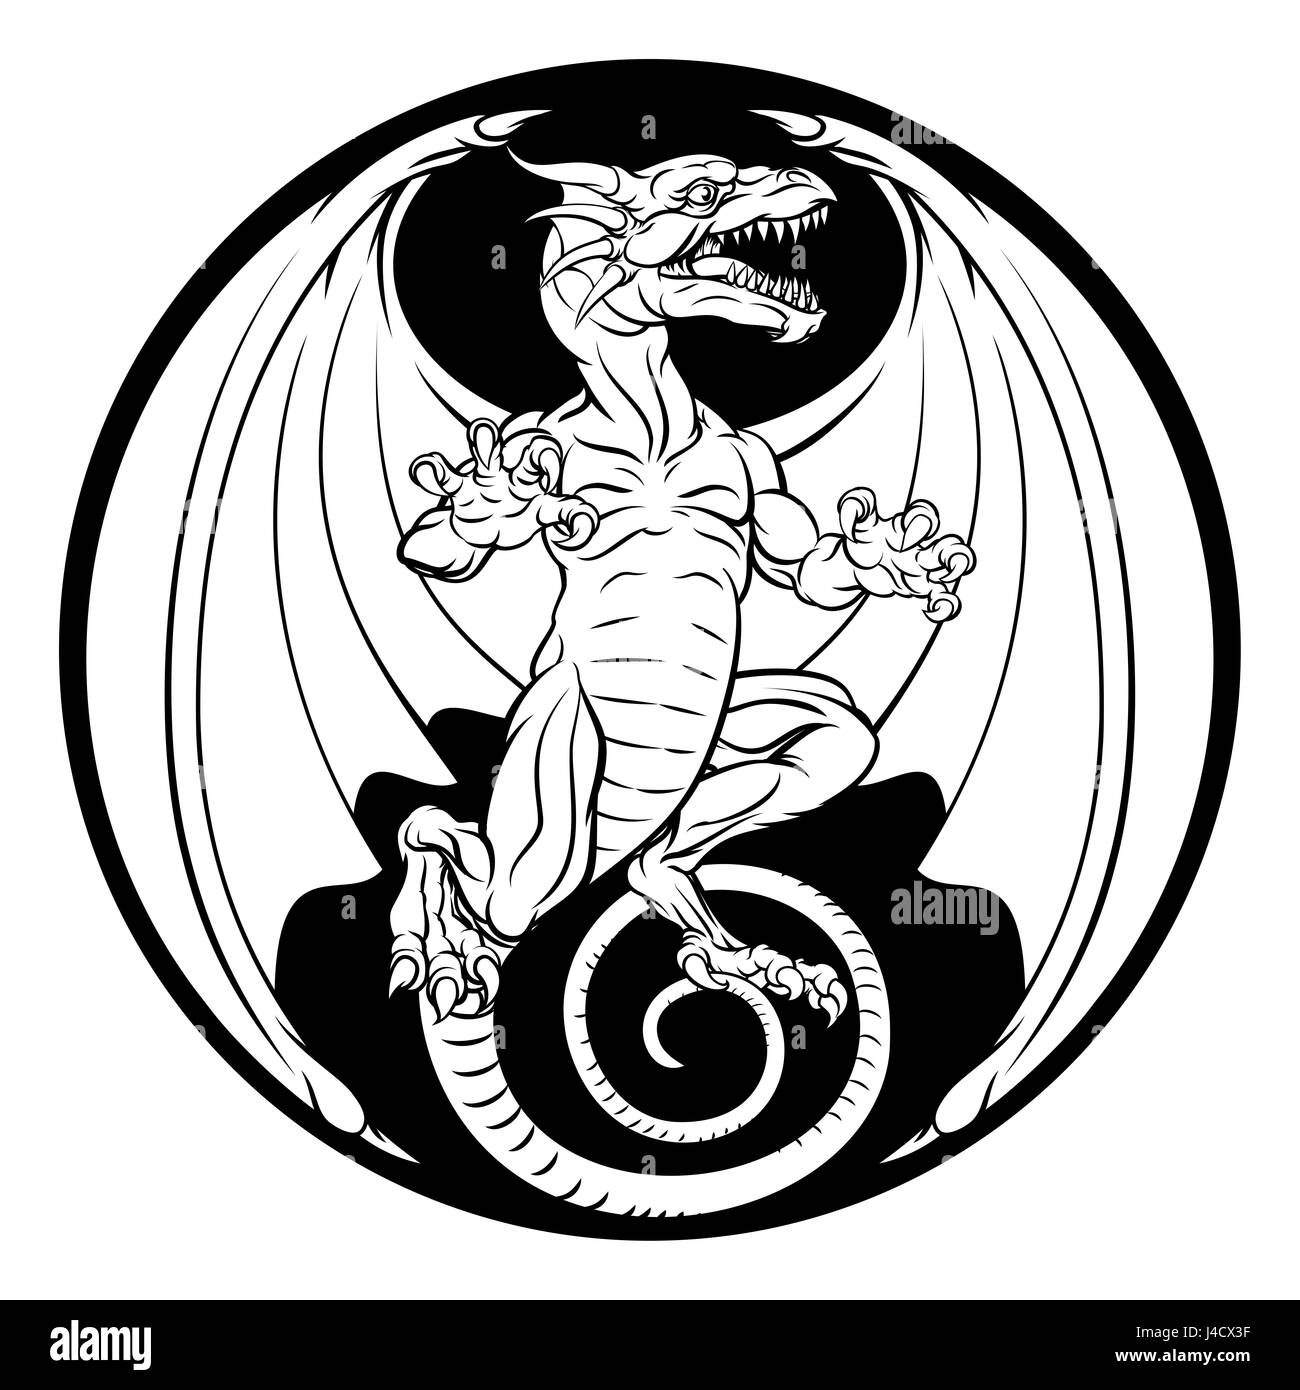 A dragon illustration in a circular design Stock Photo